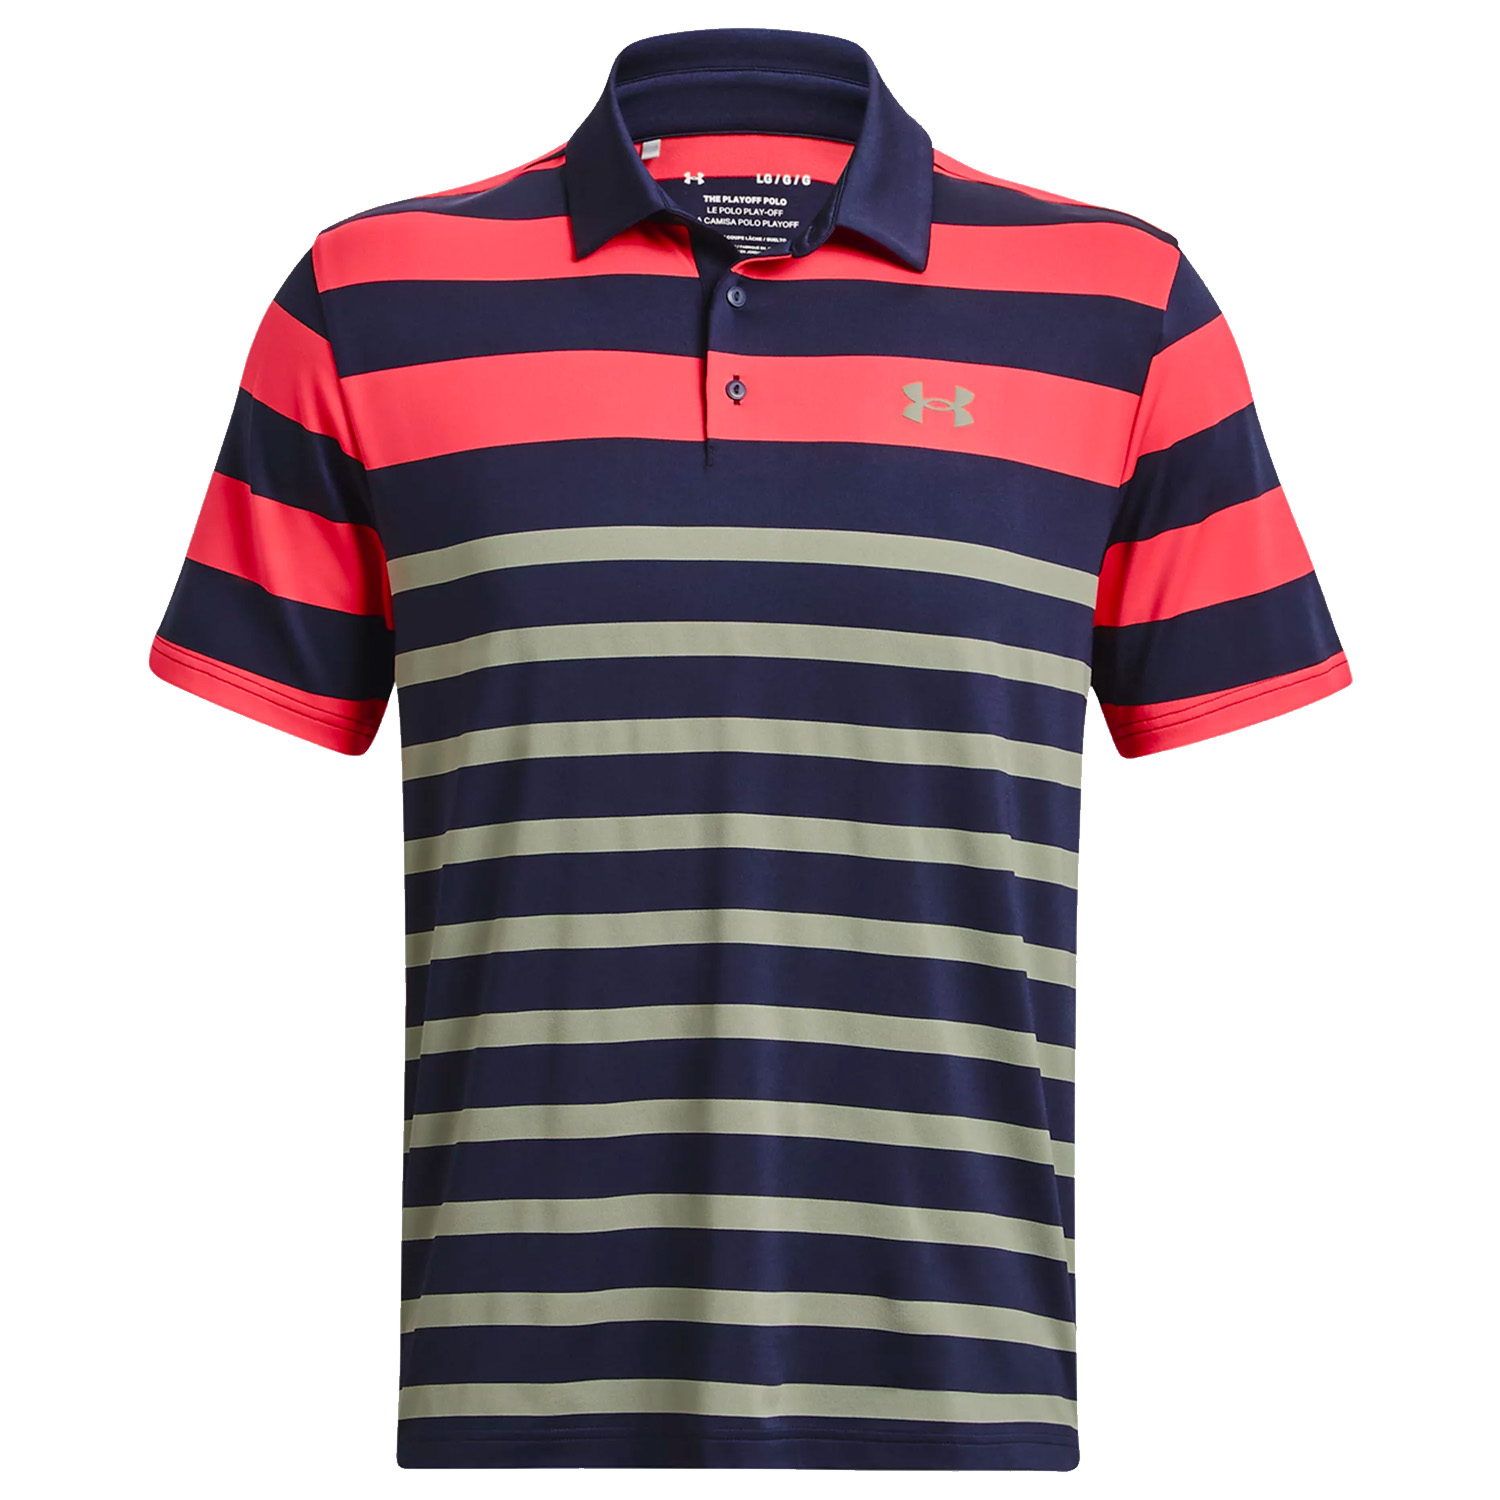 Under Armour Golf Playoff 3.0 Stripe Polo Shirt  - Midnight Navy/Red